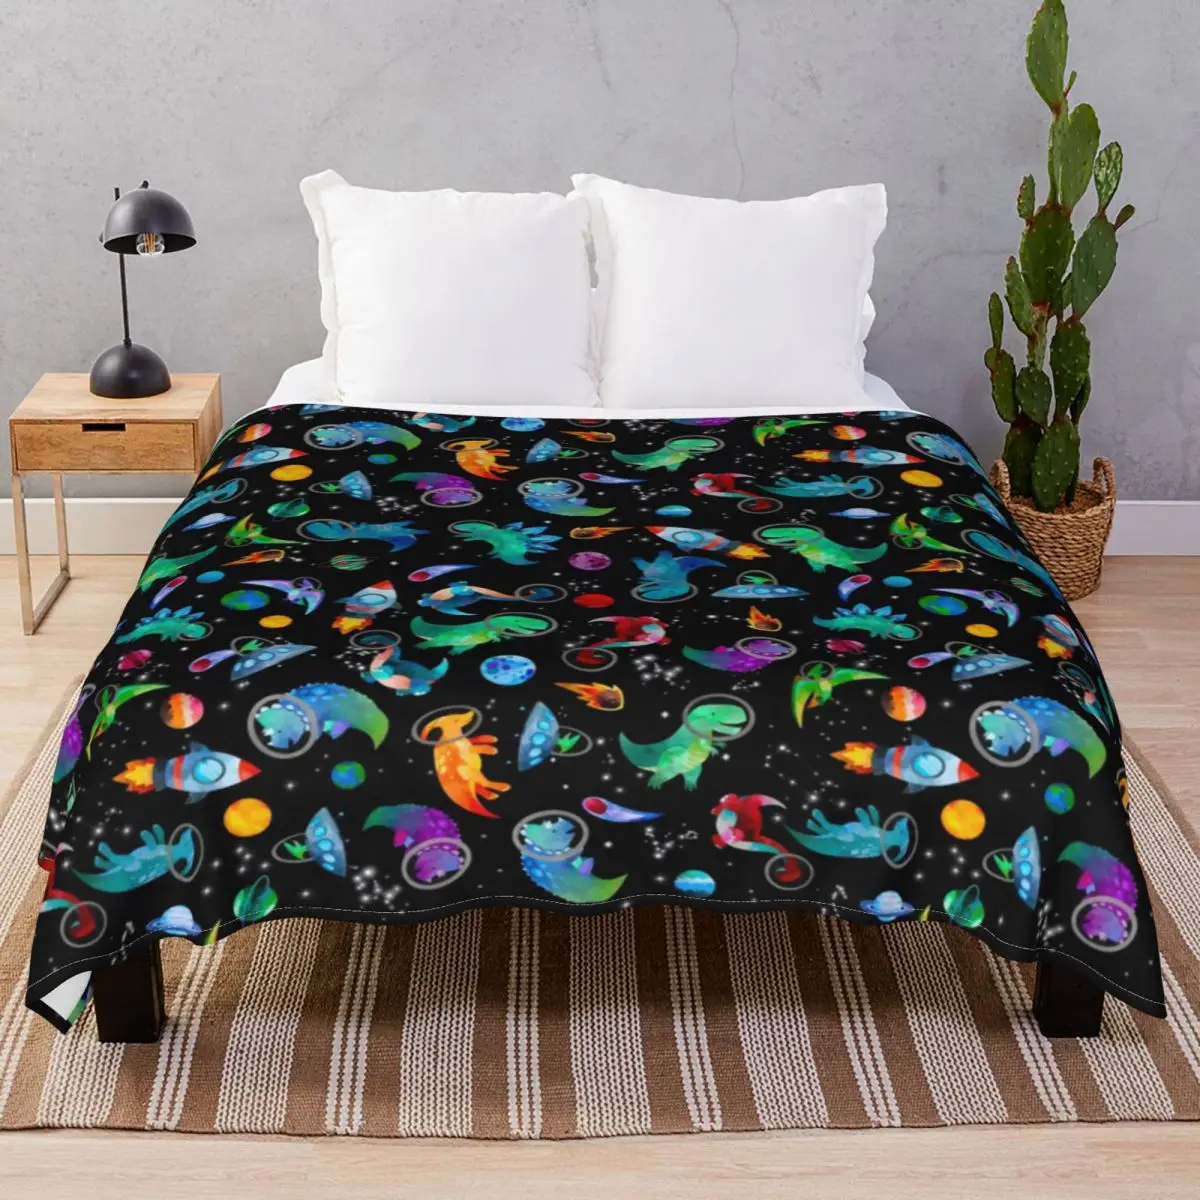 Watercolor Dinosaurs Galaxy Blanket Fleece Plush Decoration Portable Throw Blankets for Bedding Sofa Travel Cinema